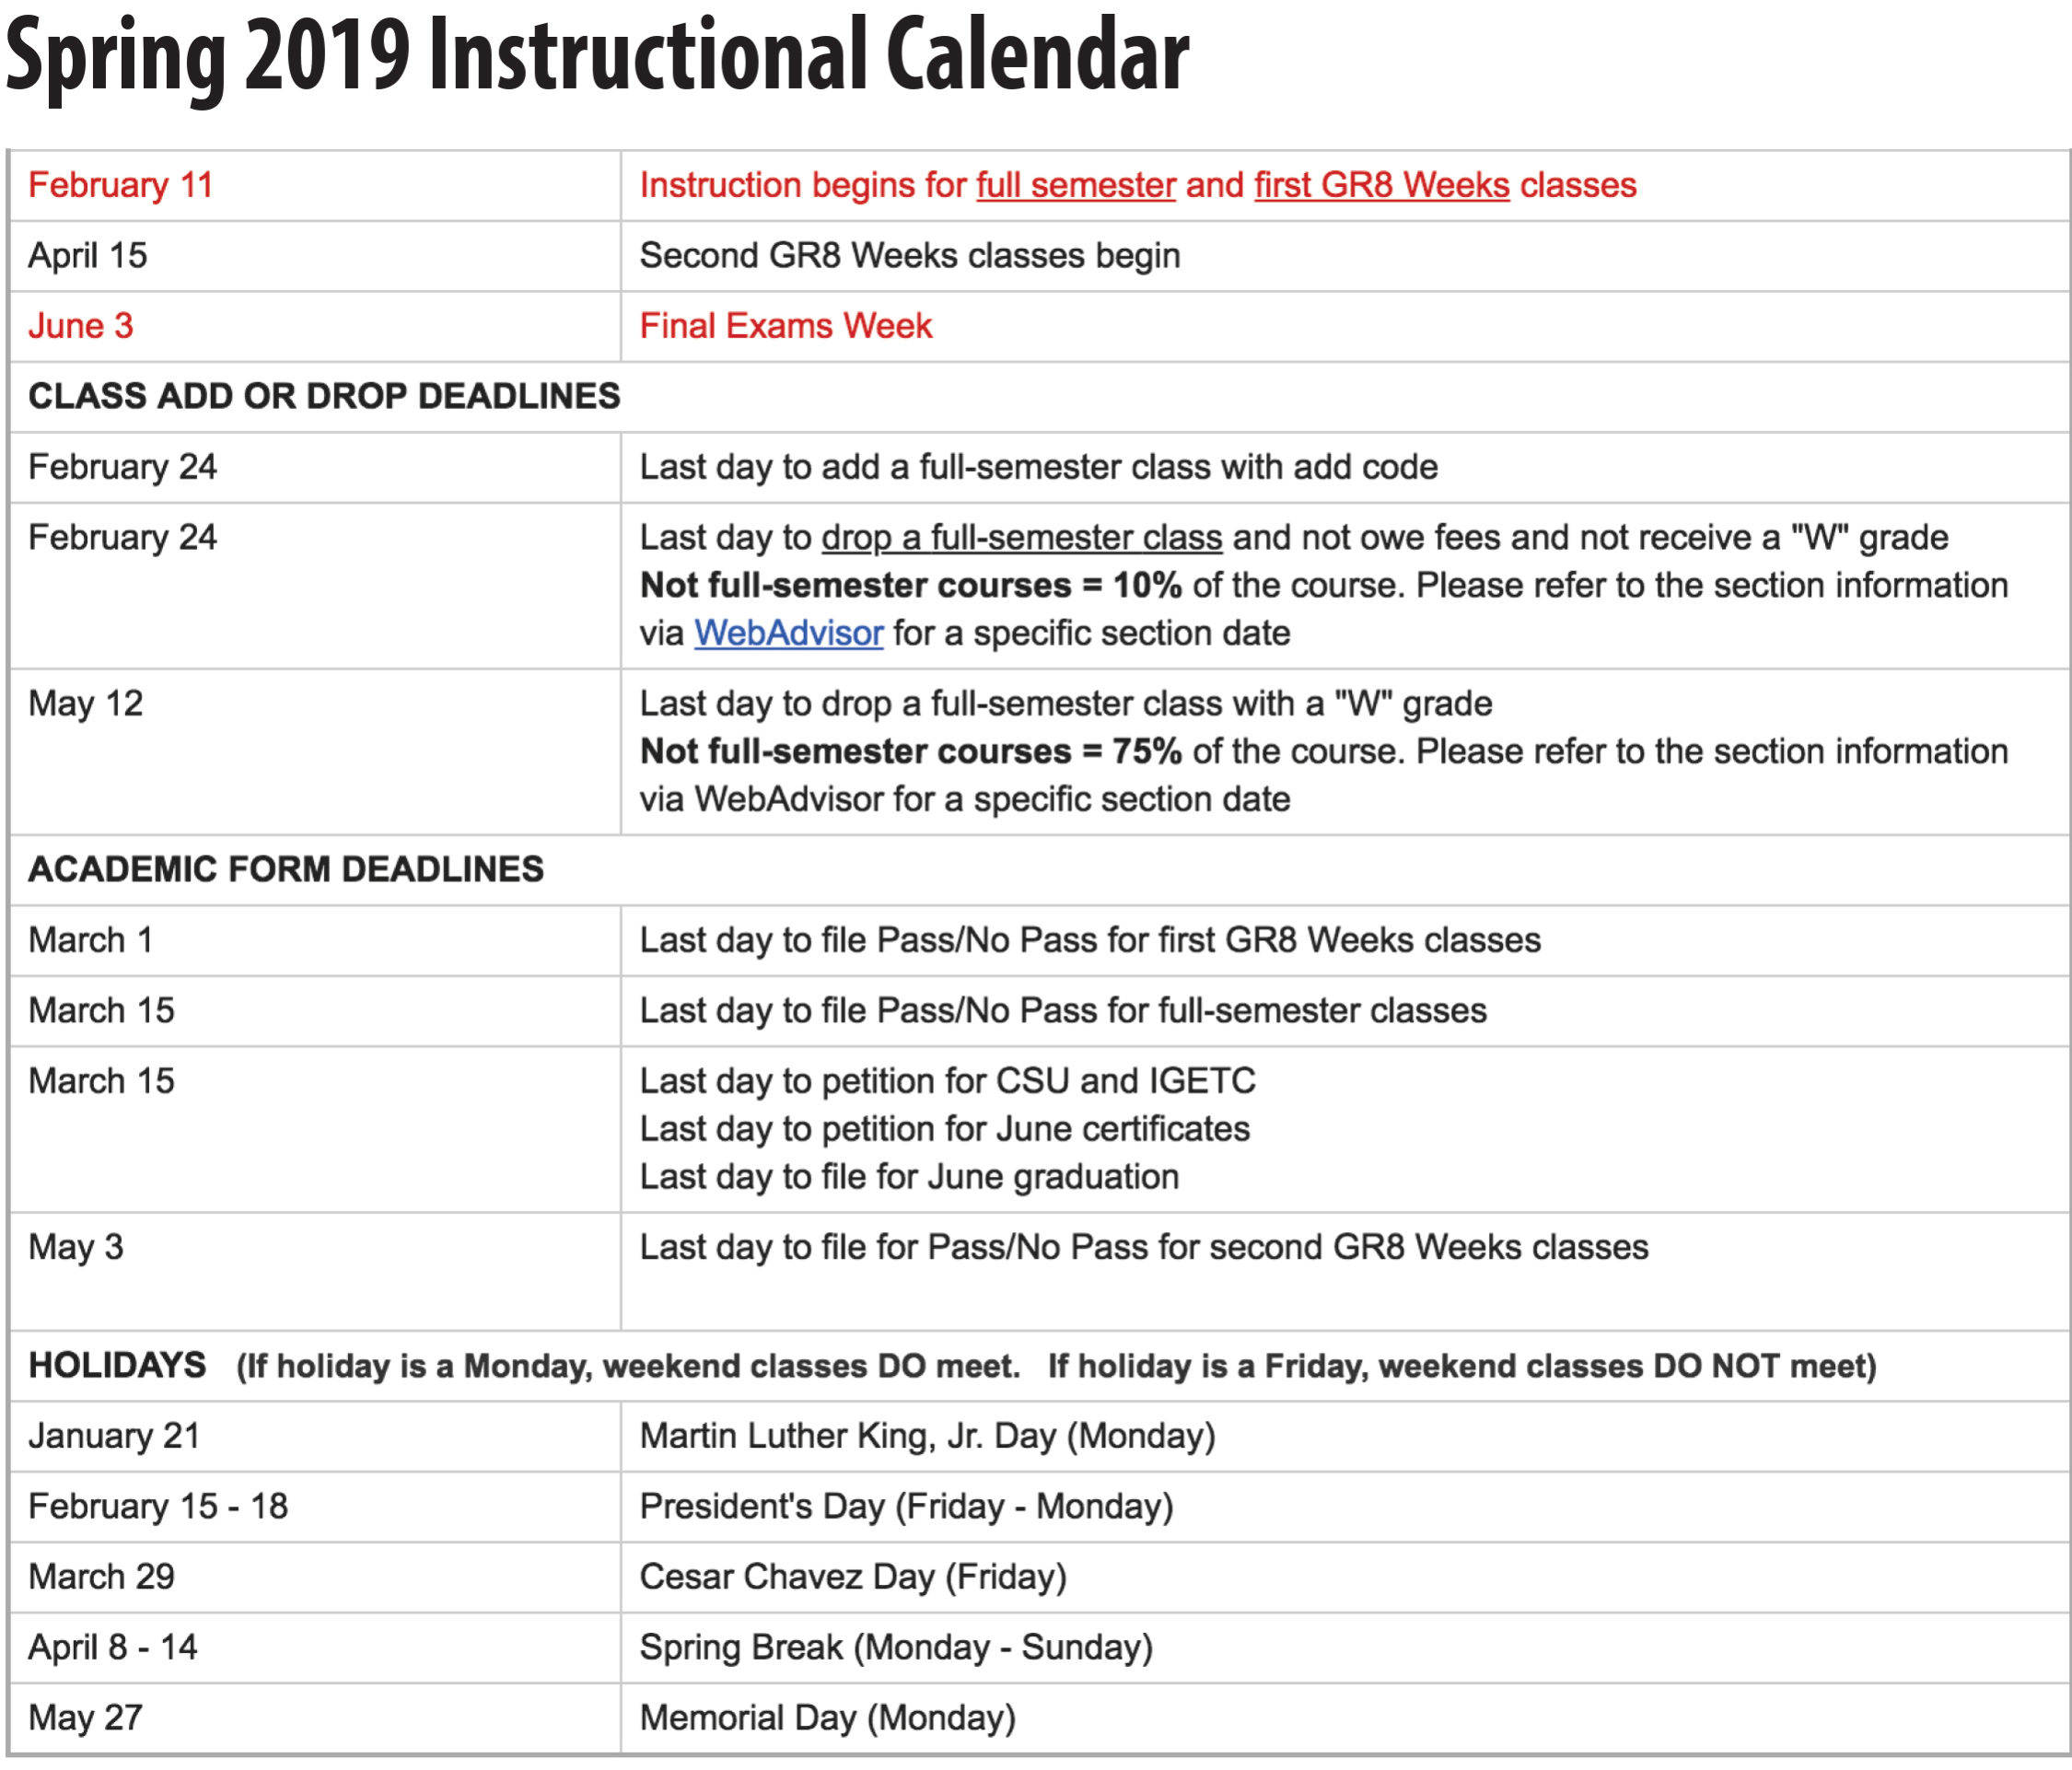 Spring 2019 Important Academic Calendar Dates - El Don News